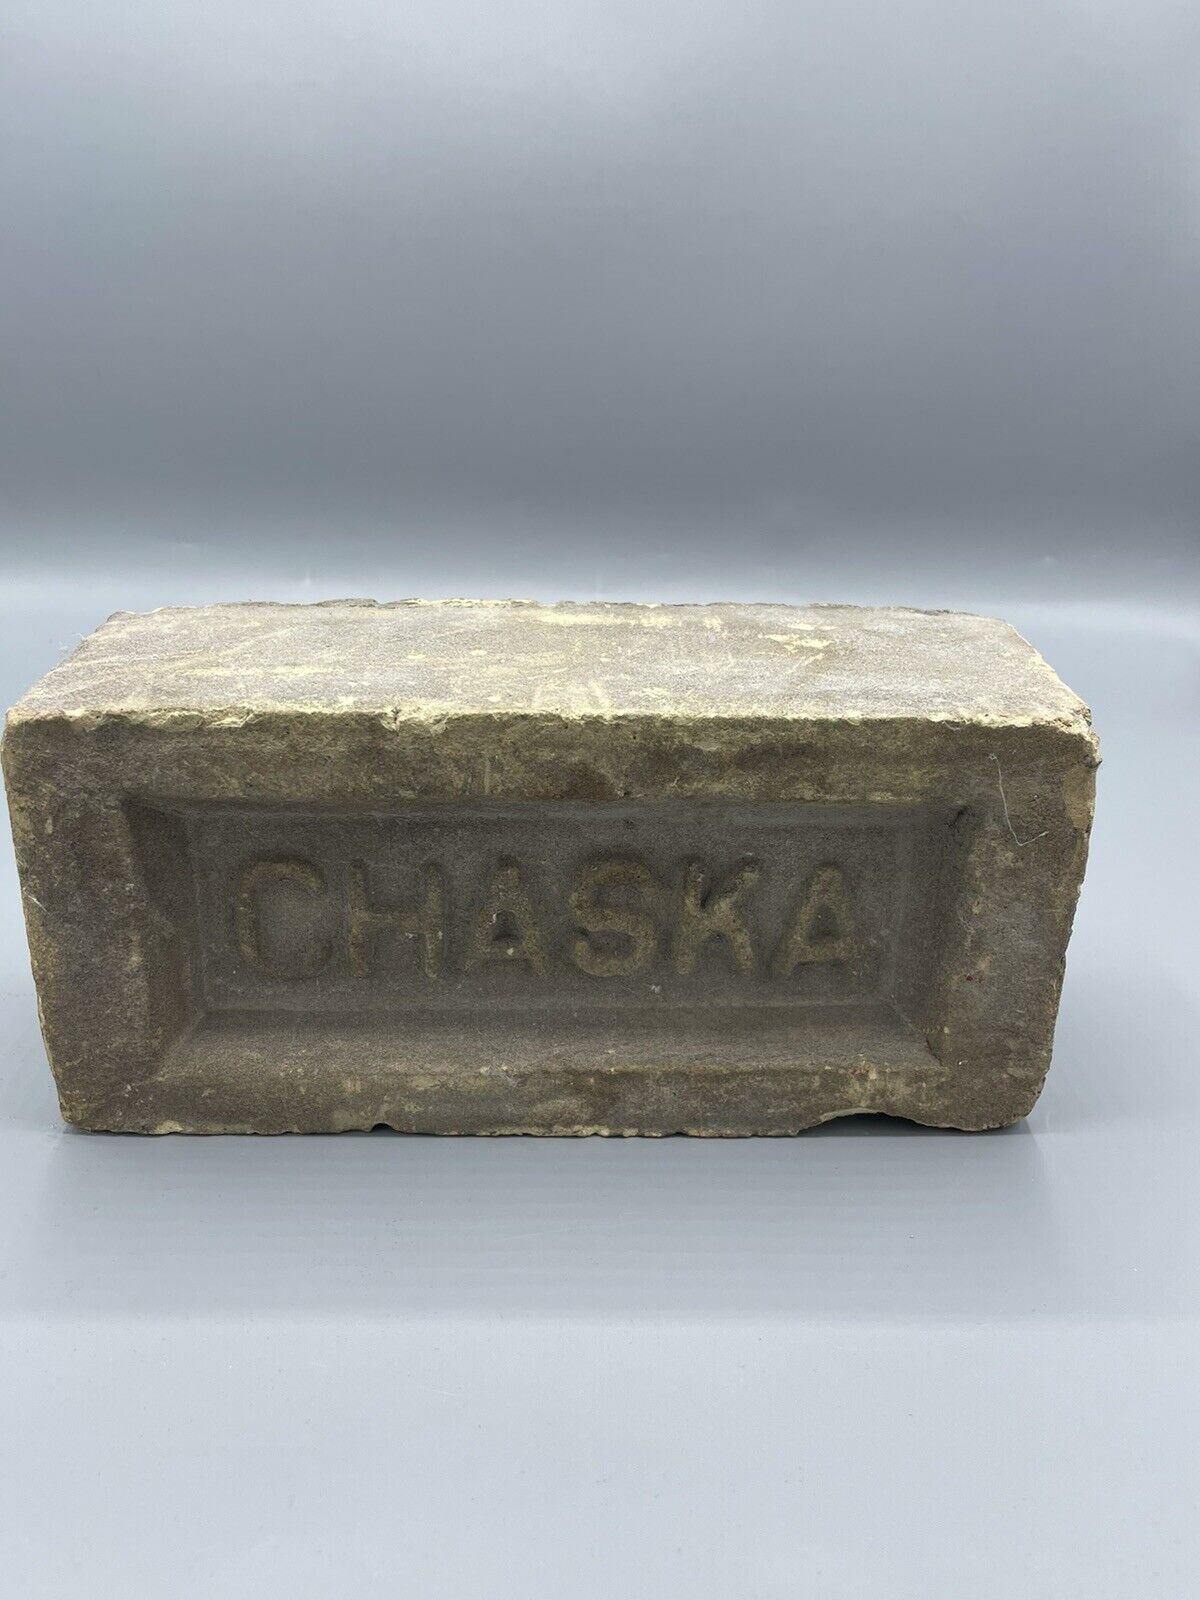 Chaska Brickyards 1857-1972 Fireman’s Park Chaska, Minnesota Original Brick